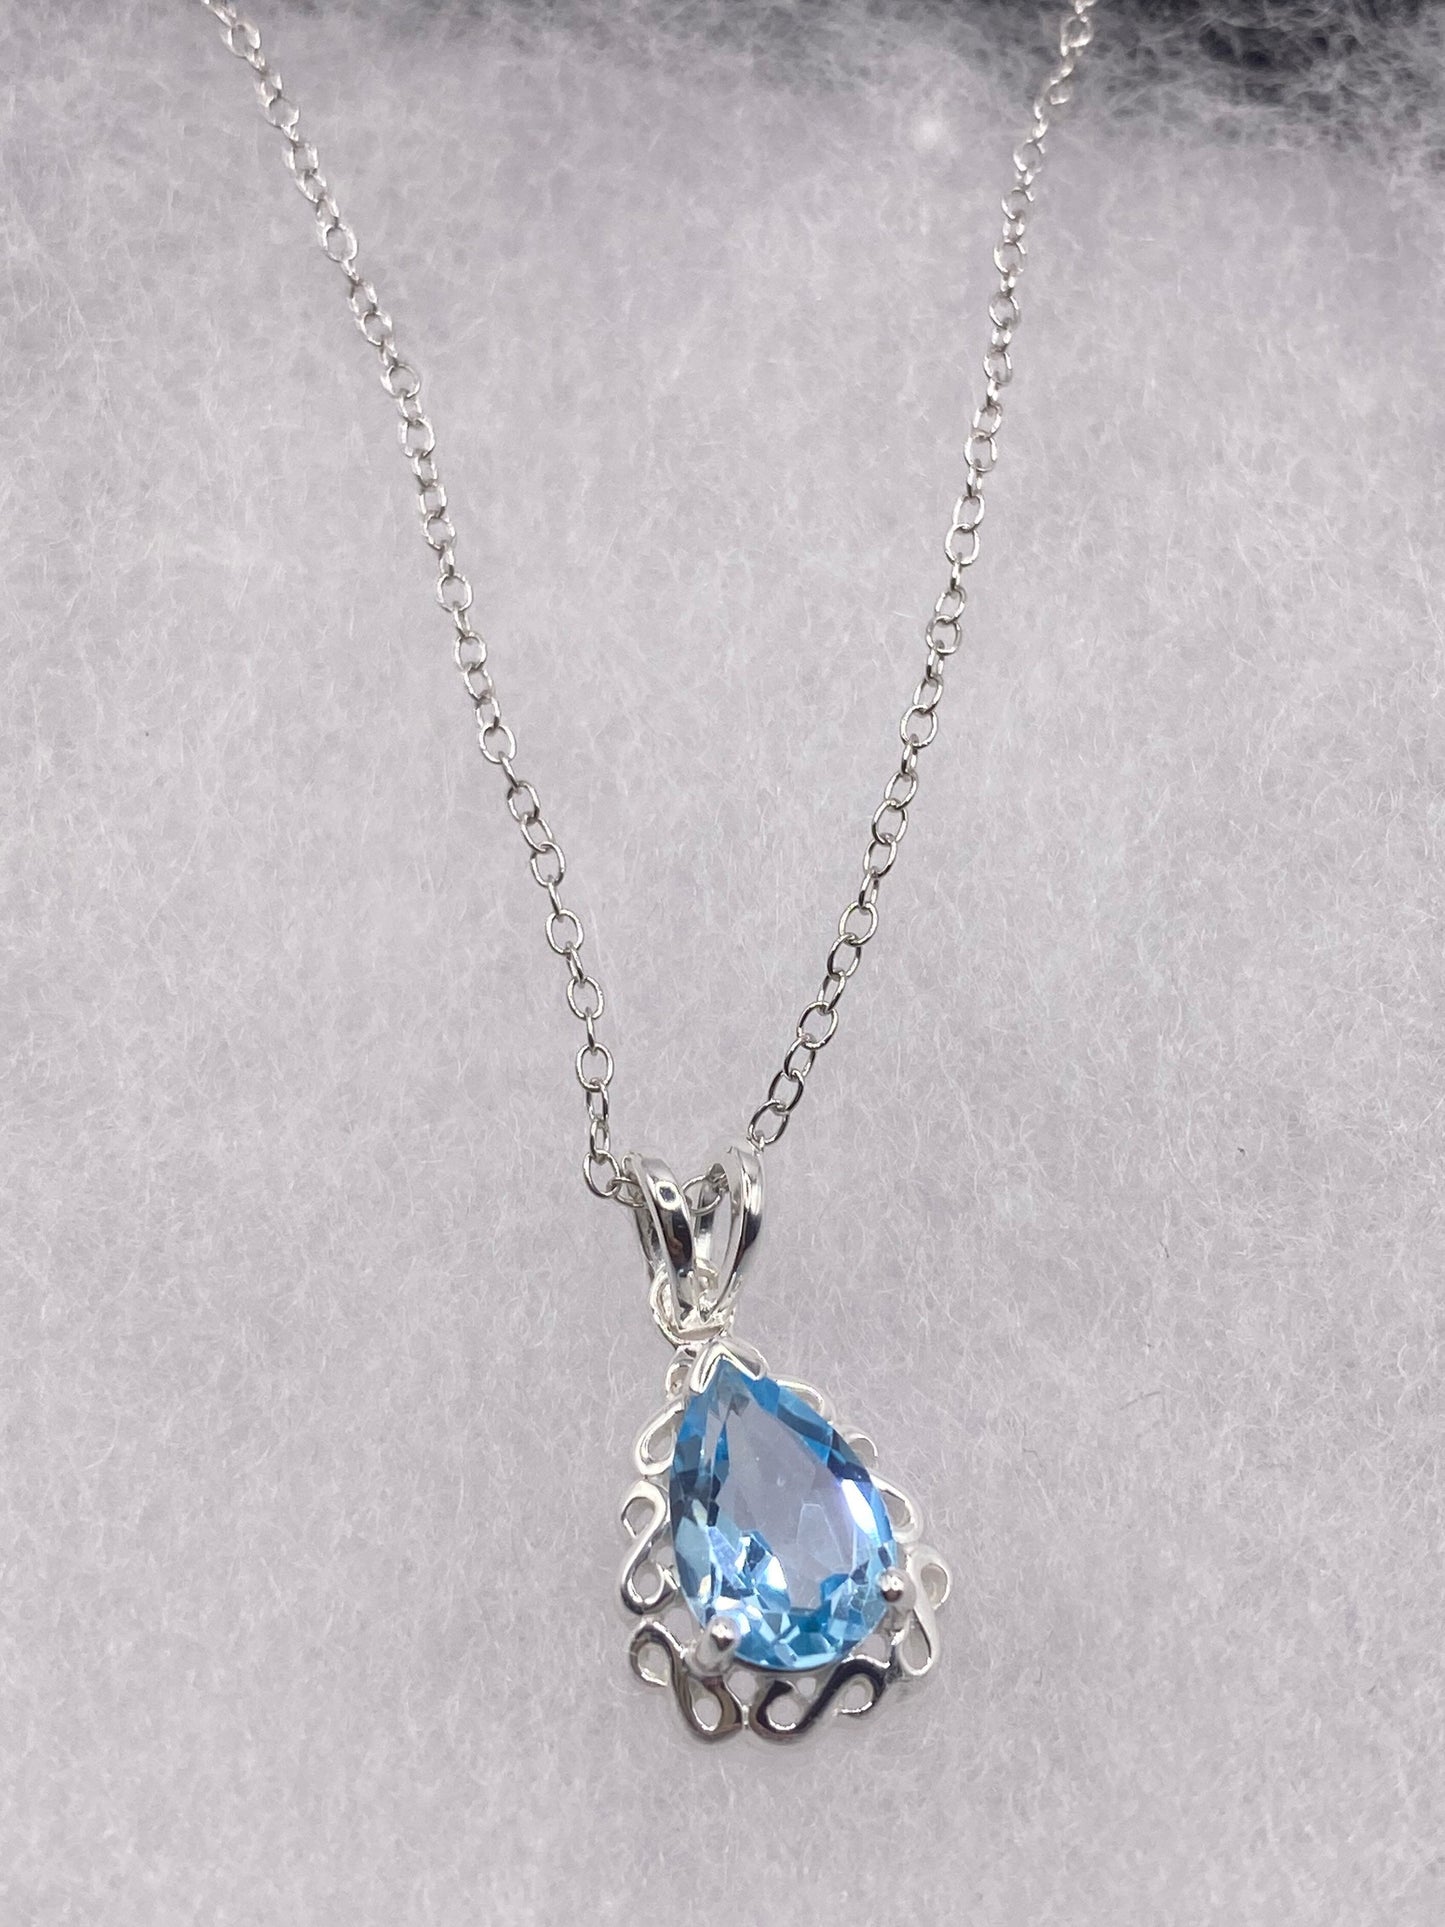 Vintage Blue Topaz Choker 925 Sterling Silver Pendant Necklace